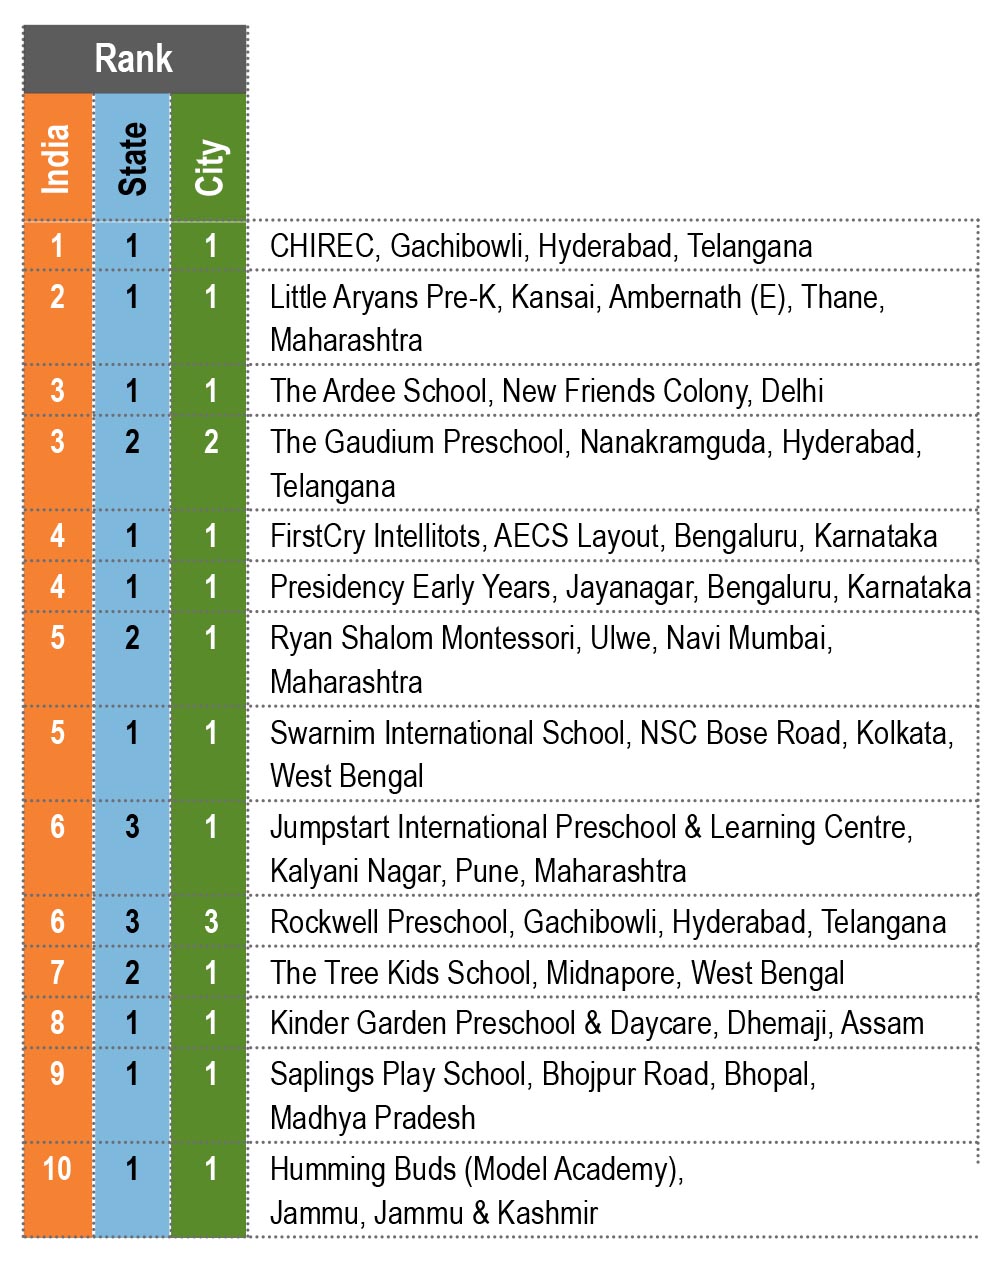 EducationWorld Grand Jury India preschool Rankings 2020-21